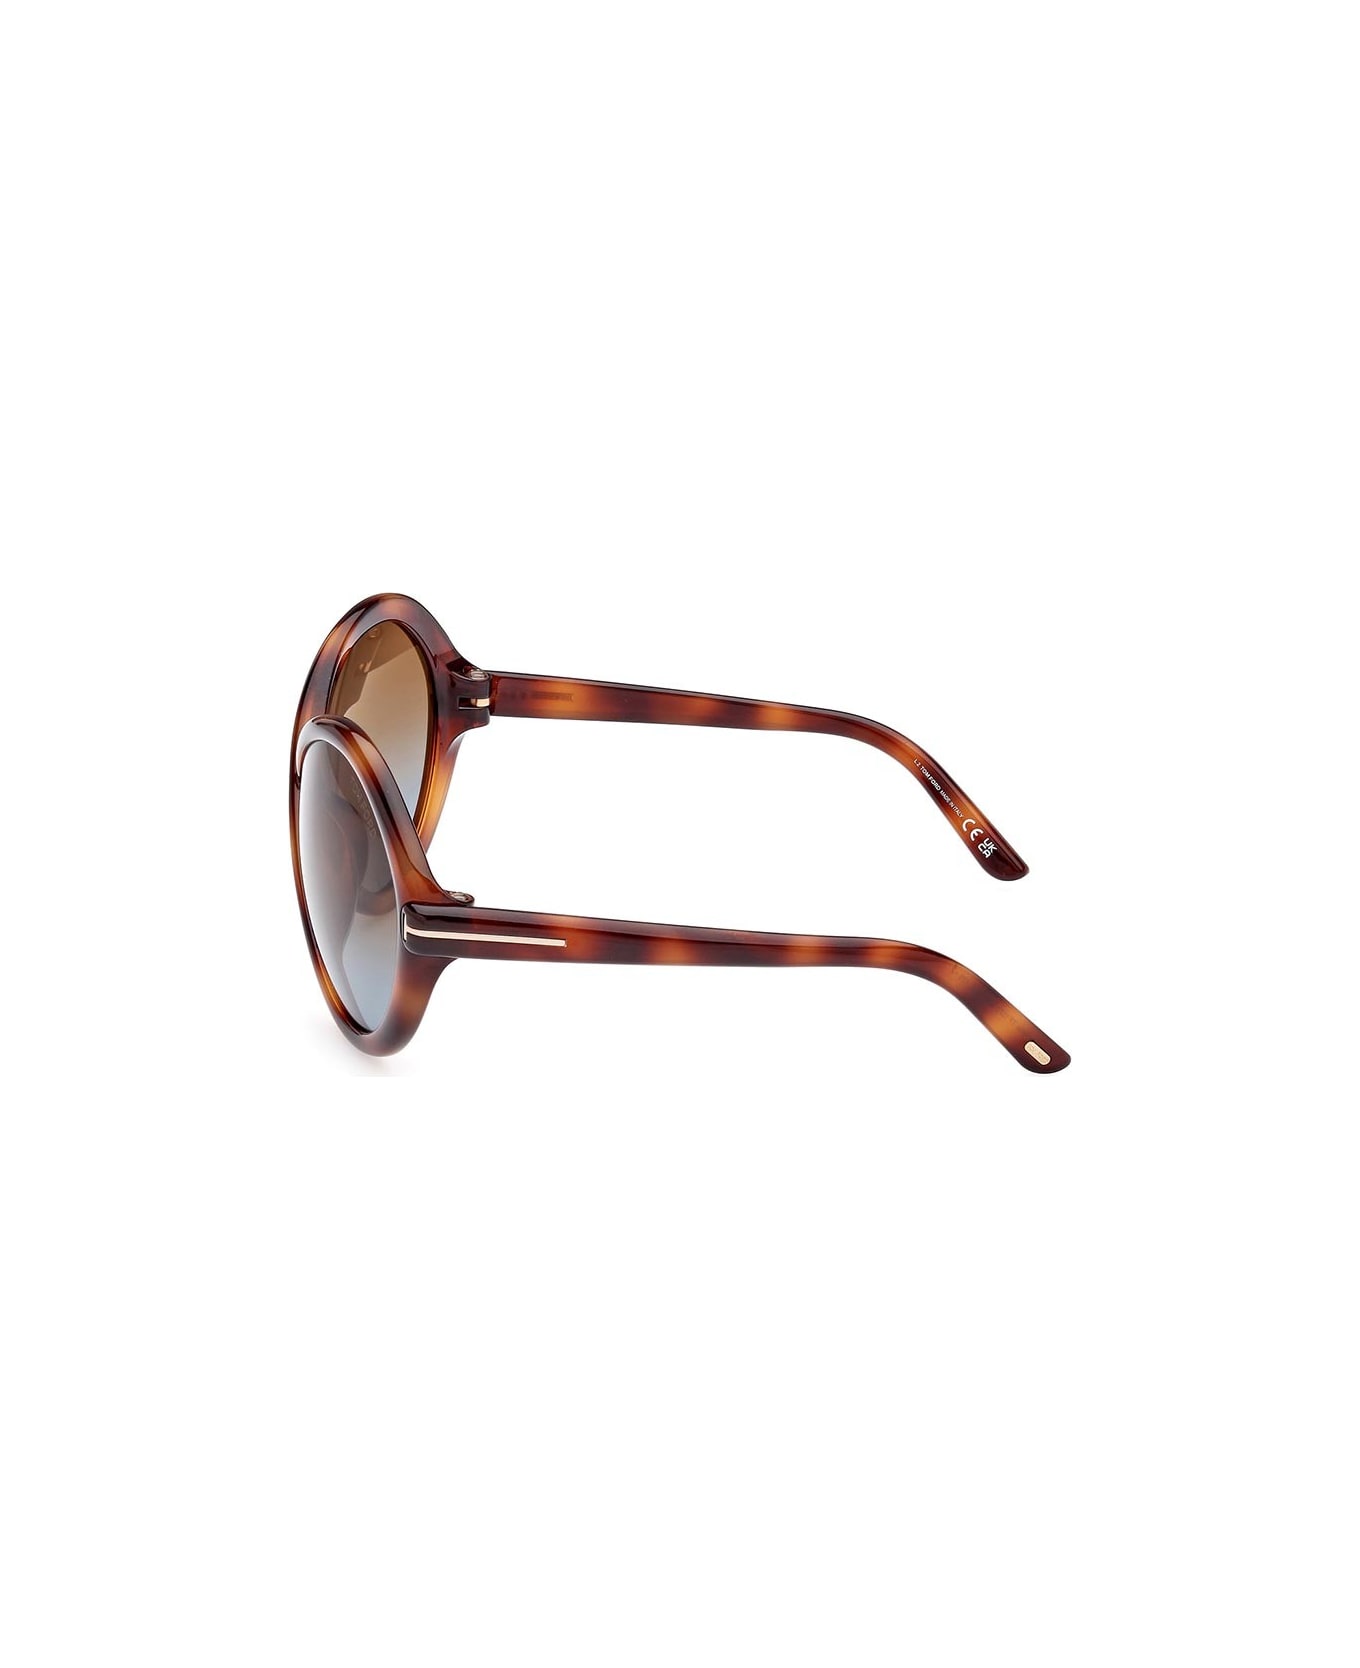 Tom Ford Eyewear Eyewear - Havana/Marrone sfumato